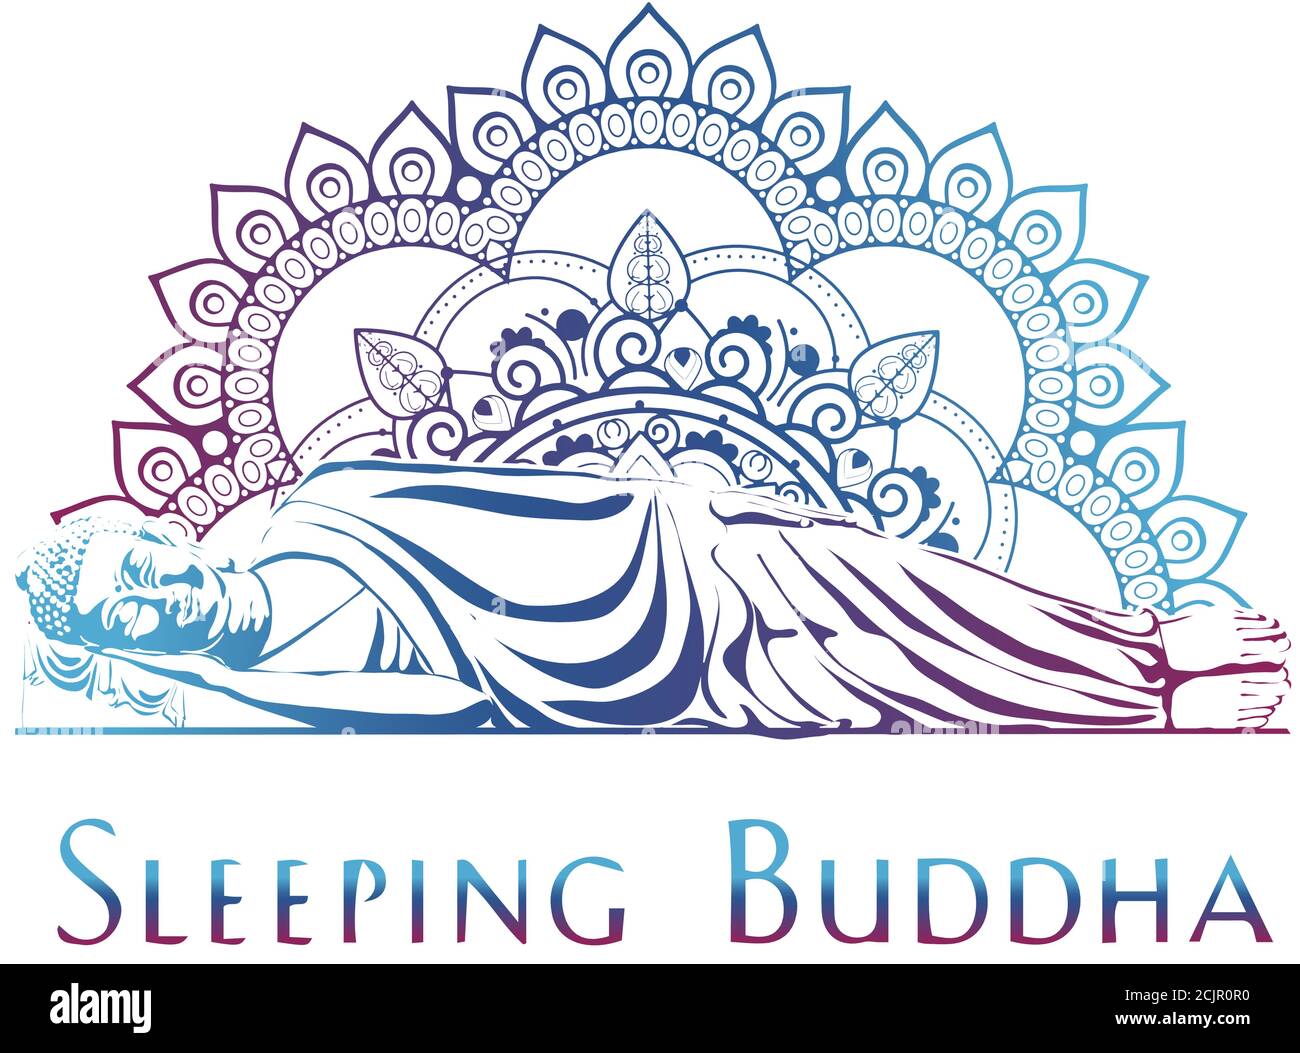 13342 Sleeping Buddha Images Stock Photos  Vectors  Shutterstock